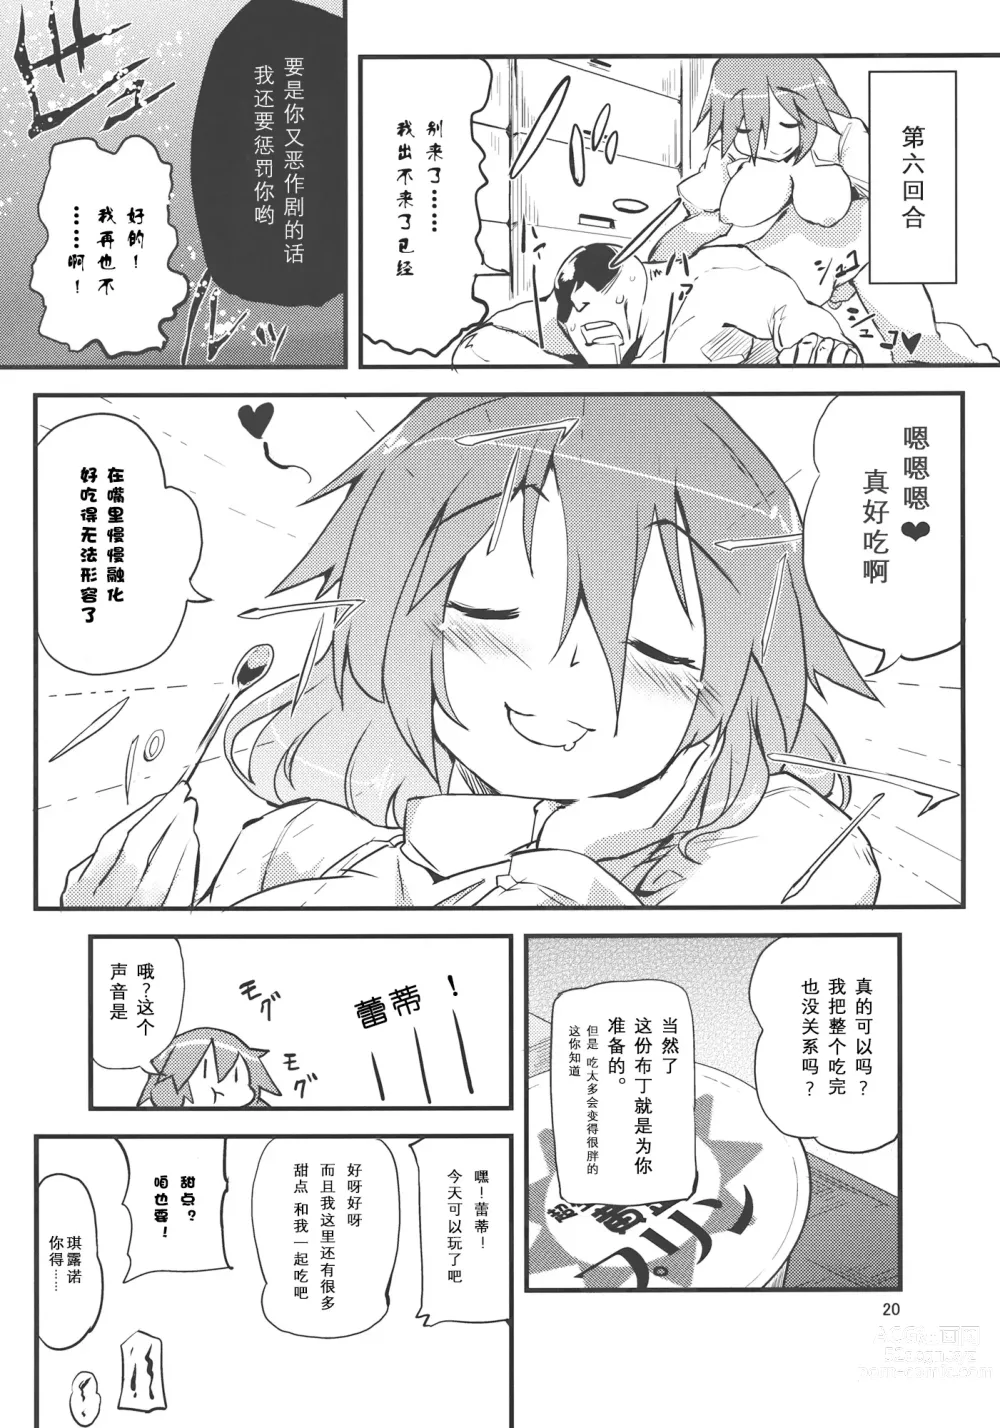 Page 20 of doujinshi ×蕾蒂